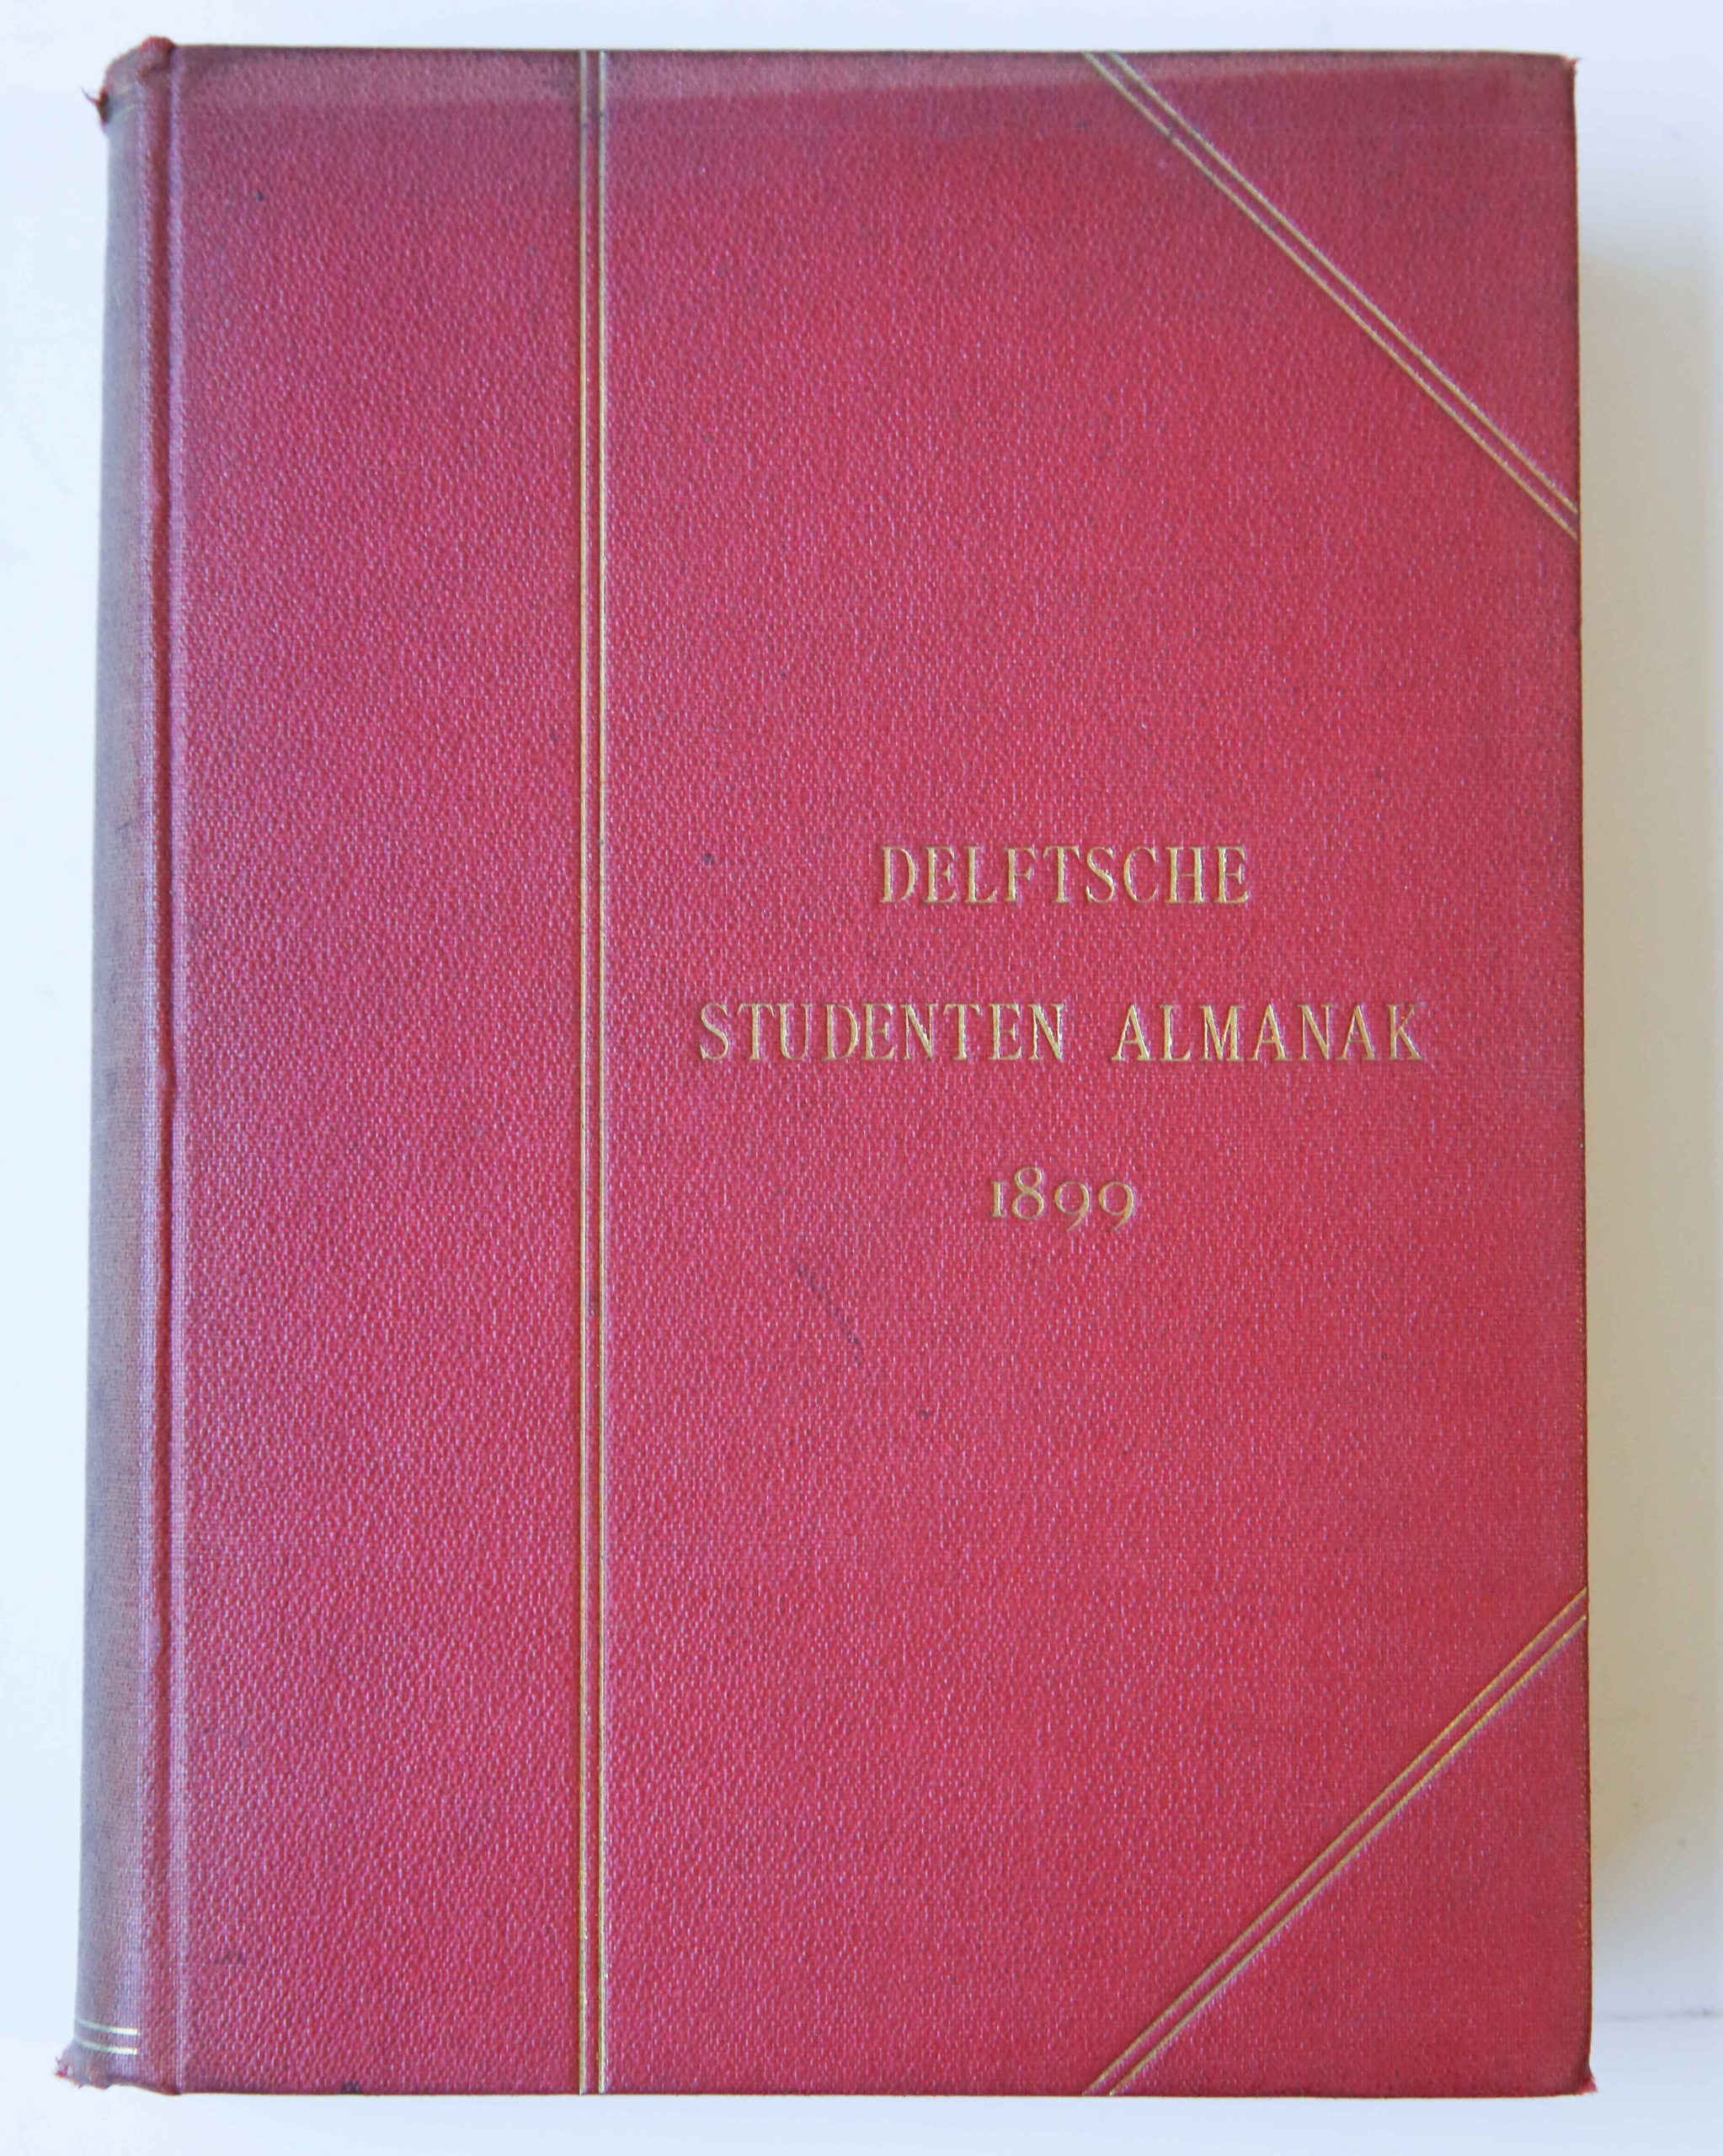 Delftsche Studenten-Almanak 1899, J. Waltman jr. Delft 1899, 457 pp.